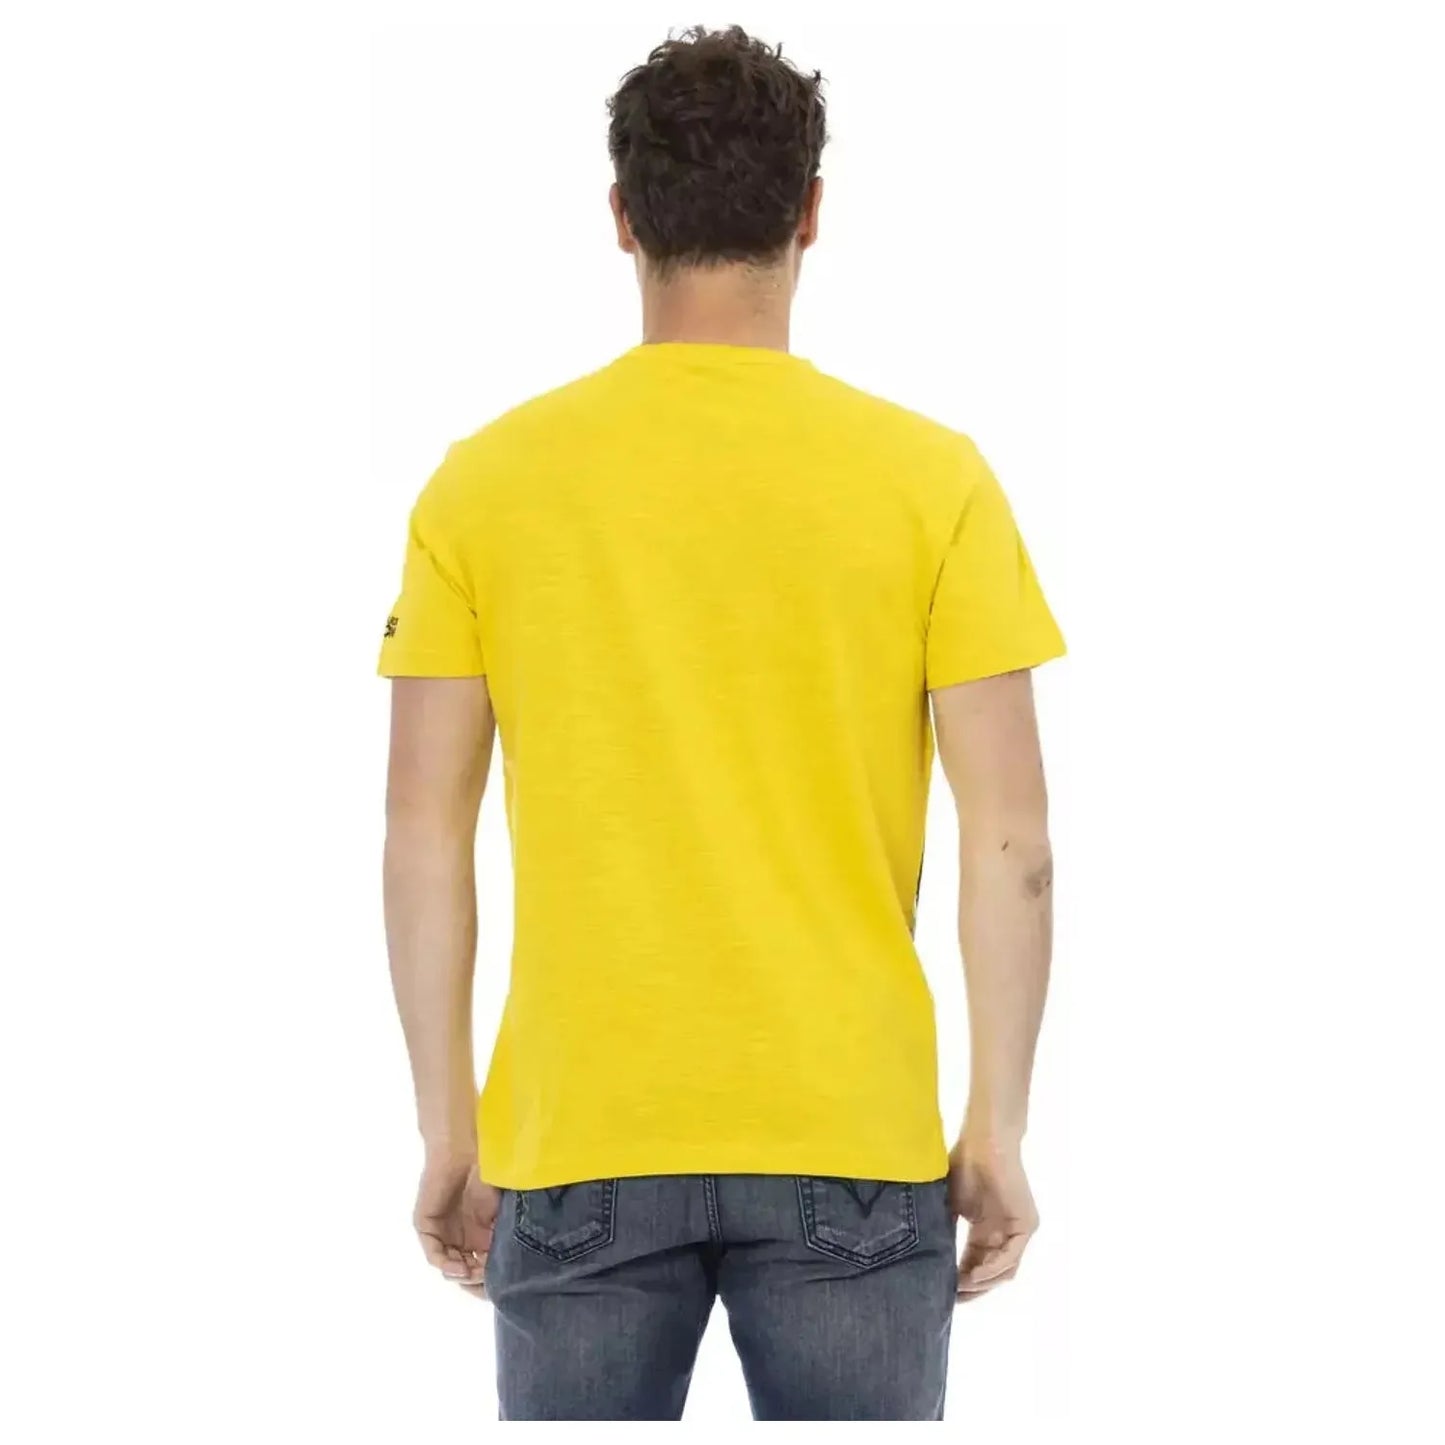 Trussardi Action Sleek Short Sleeve Cotton Blend Tee yellow-cotton-t-shirt-12